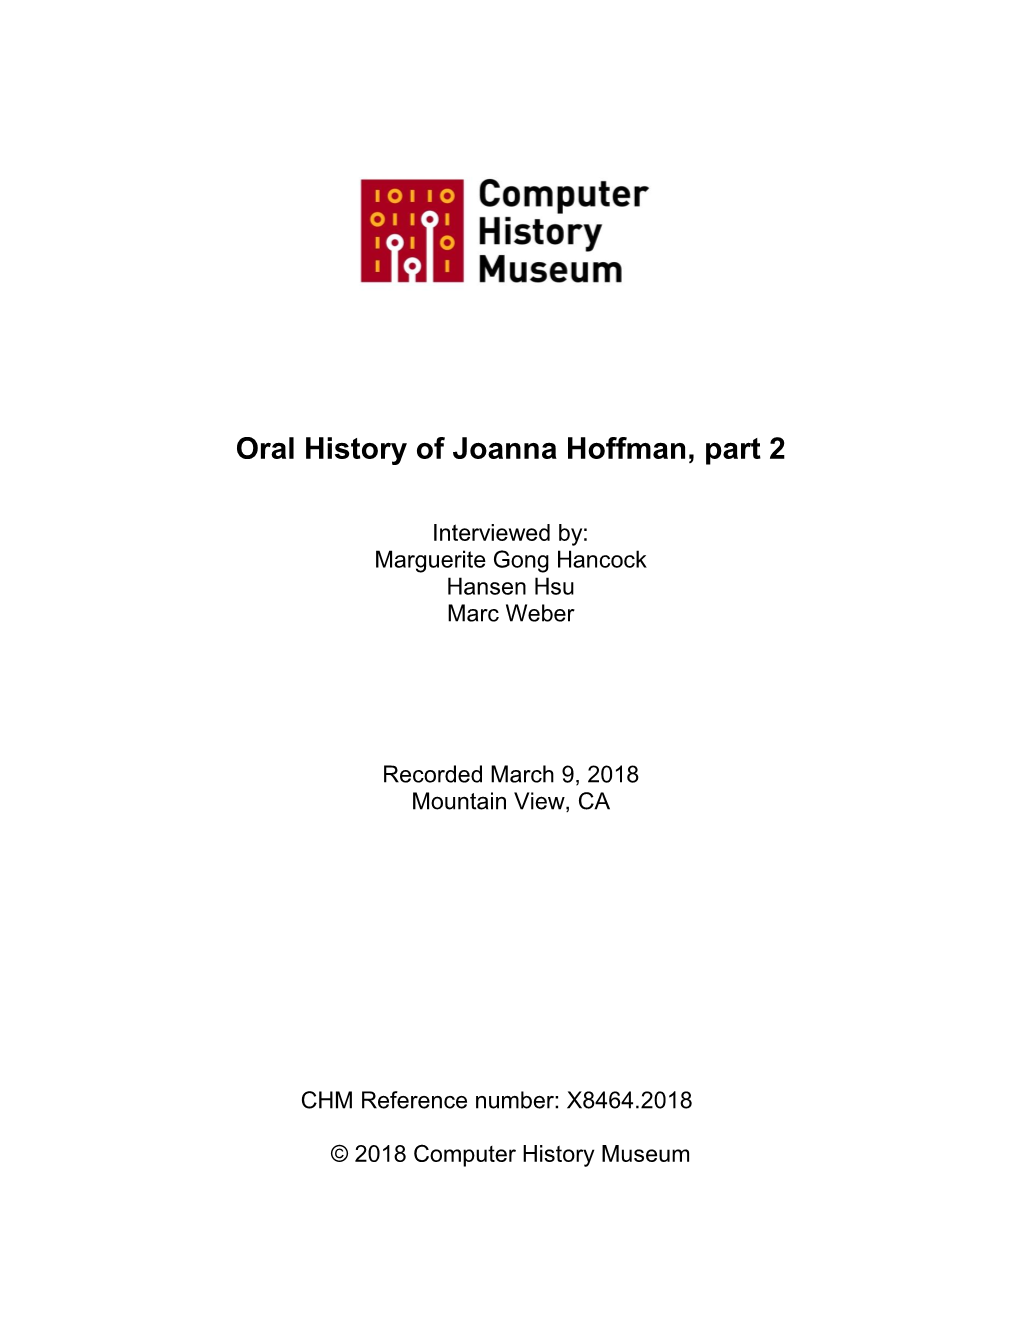 Oral History of Joanna Hoffman, Part 2